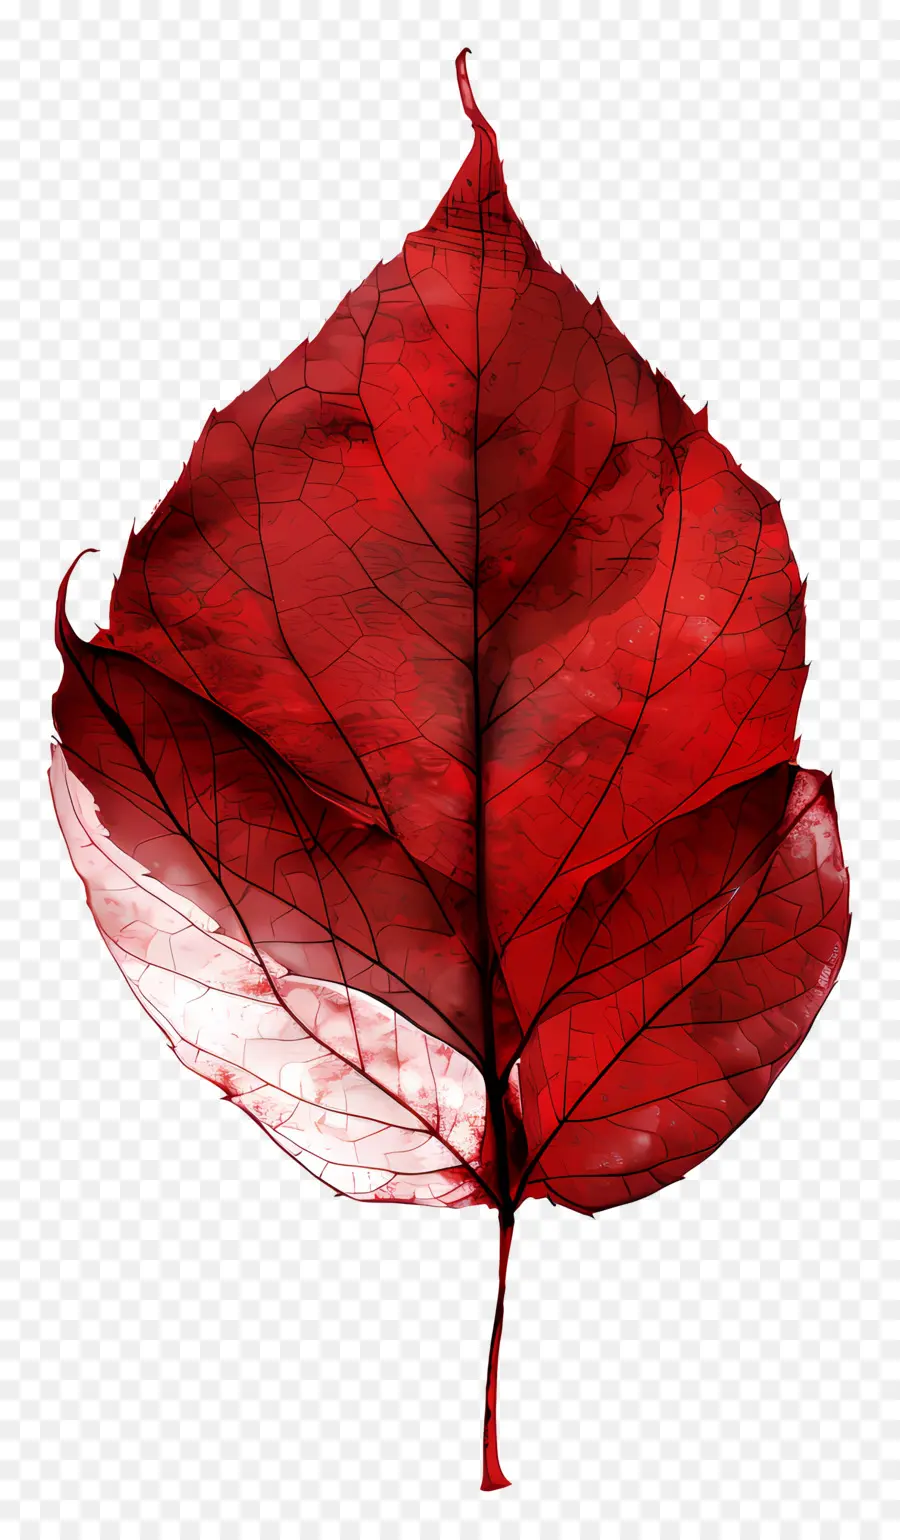 red leaf red leaf white stem veins shiny leaf